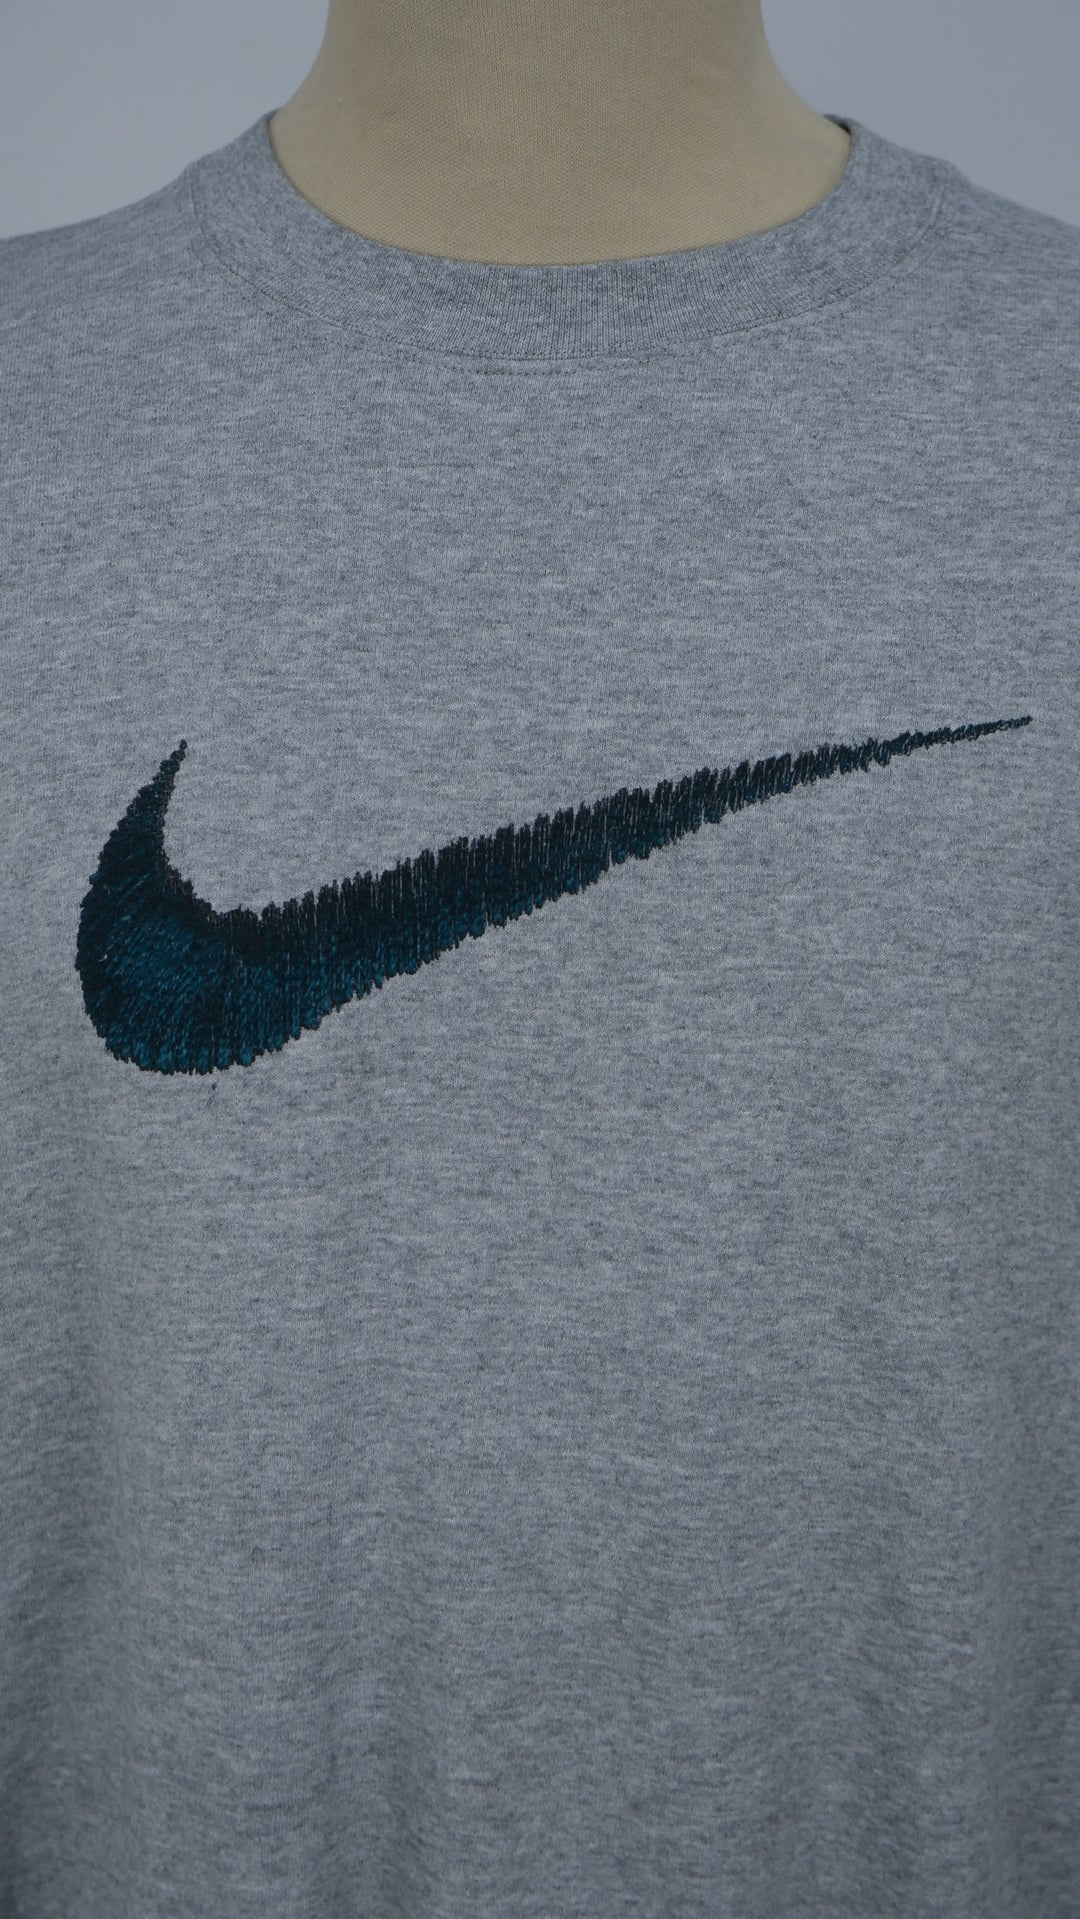 Vintage 90's Nike Swoosh Printed Crewneck Sweatshirt Made In USA